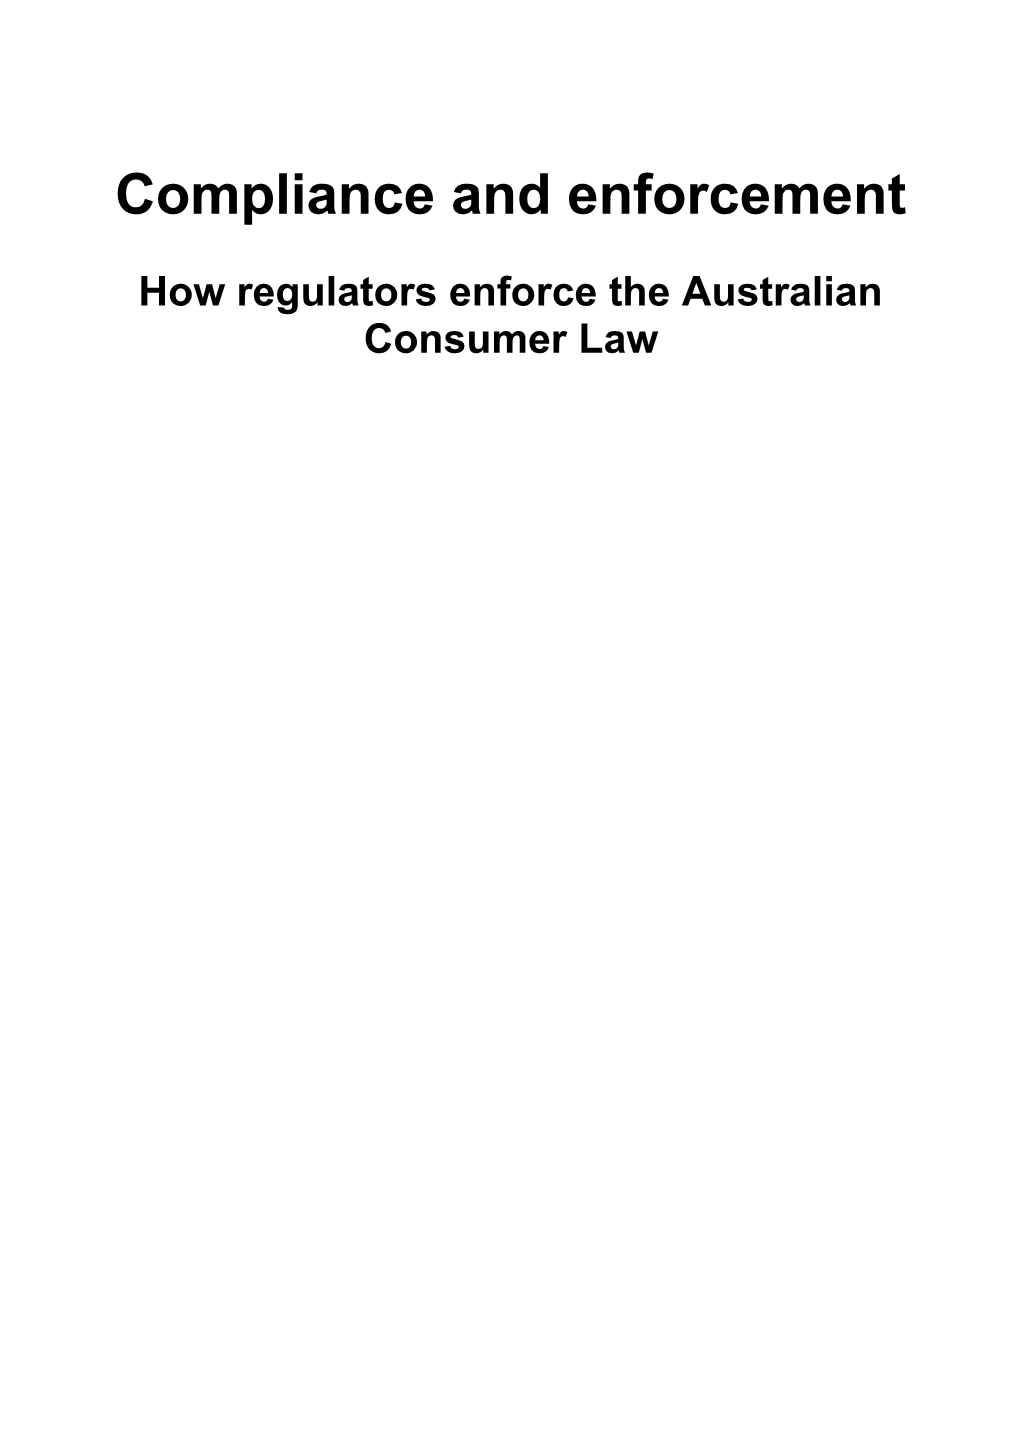 How Regulators Enforce the Australian Consumer Law